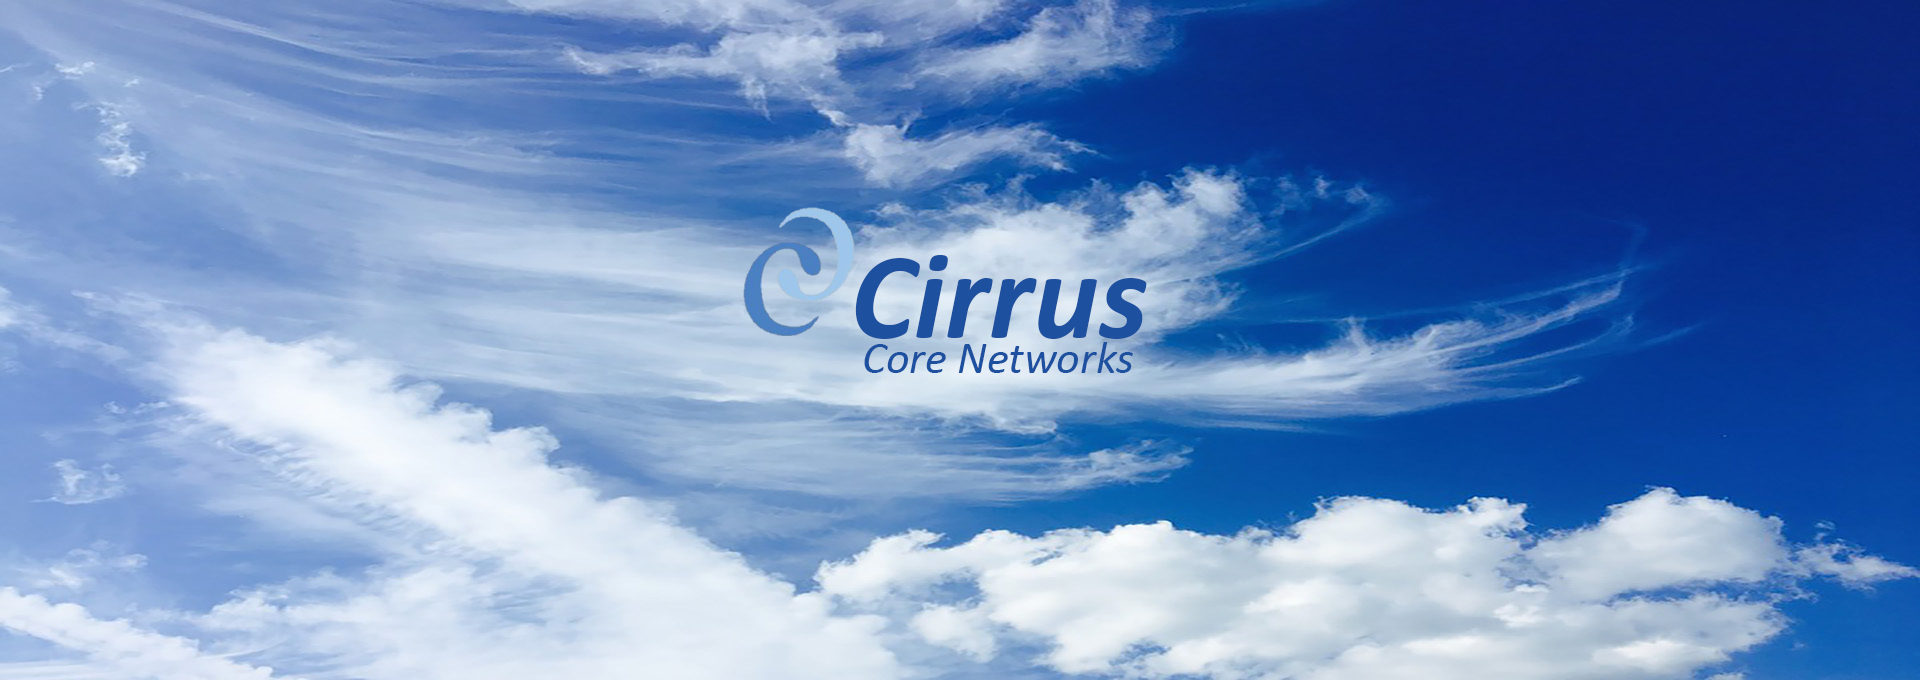 Cirrus Core Networks